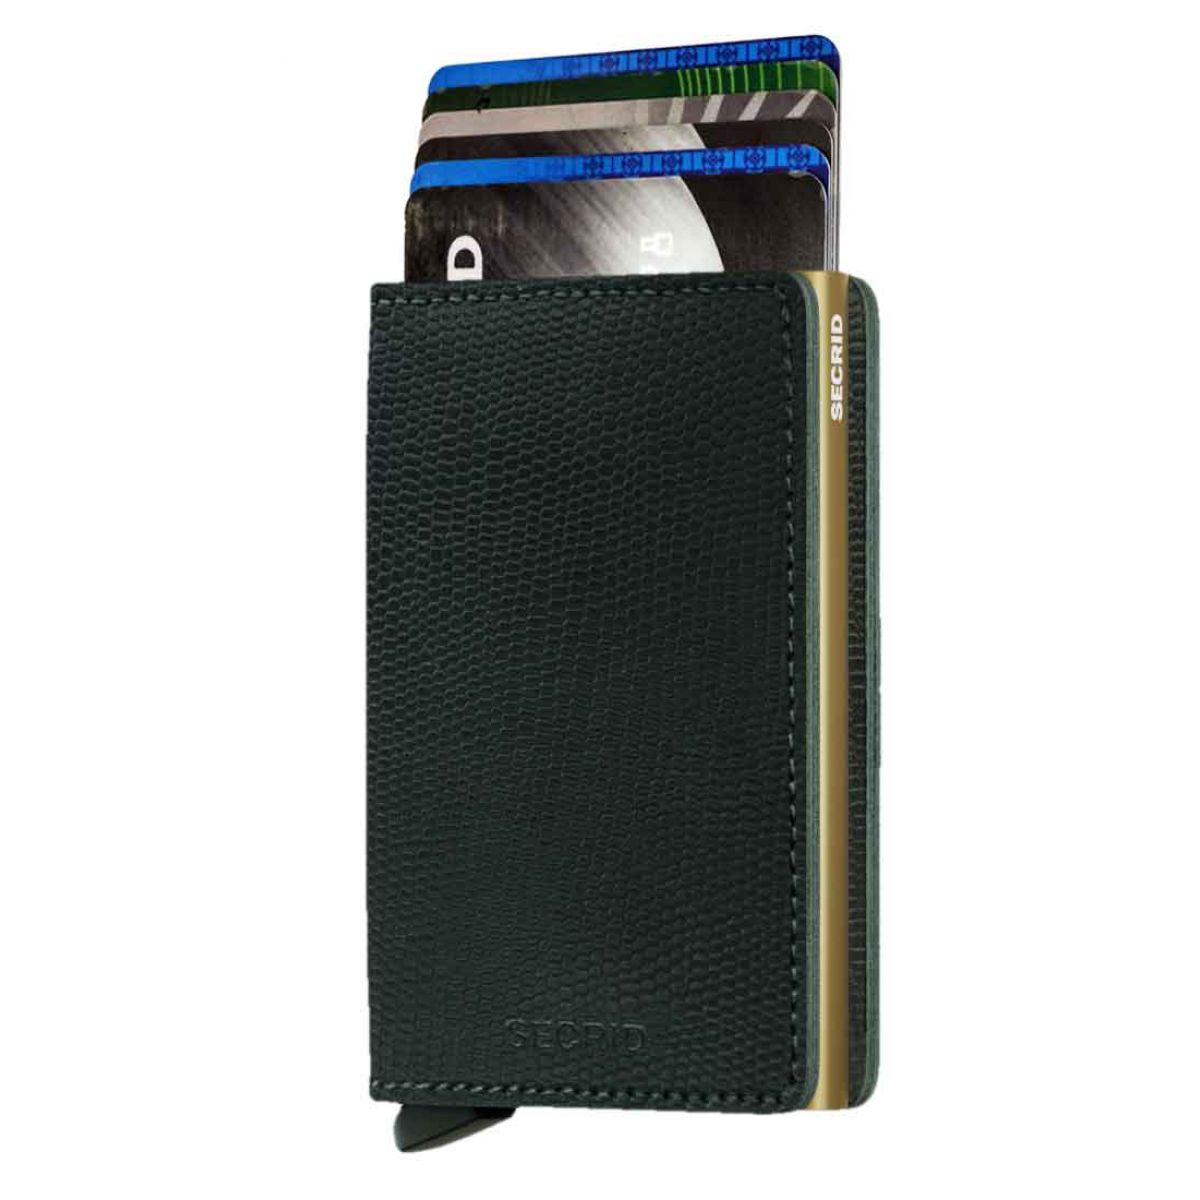 Secrid slim wallet leather Rango green gold- SECRID product code- 8718215285595